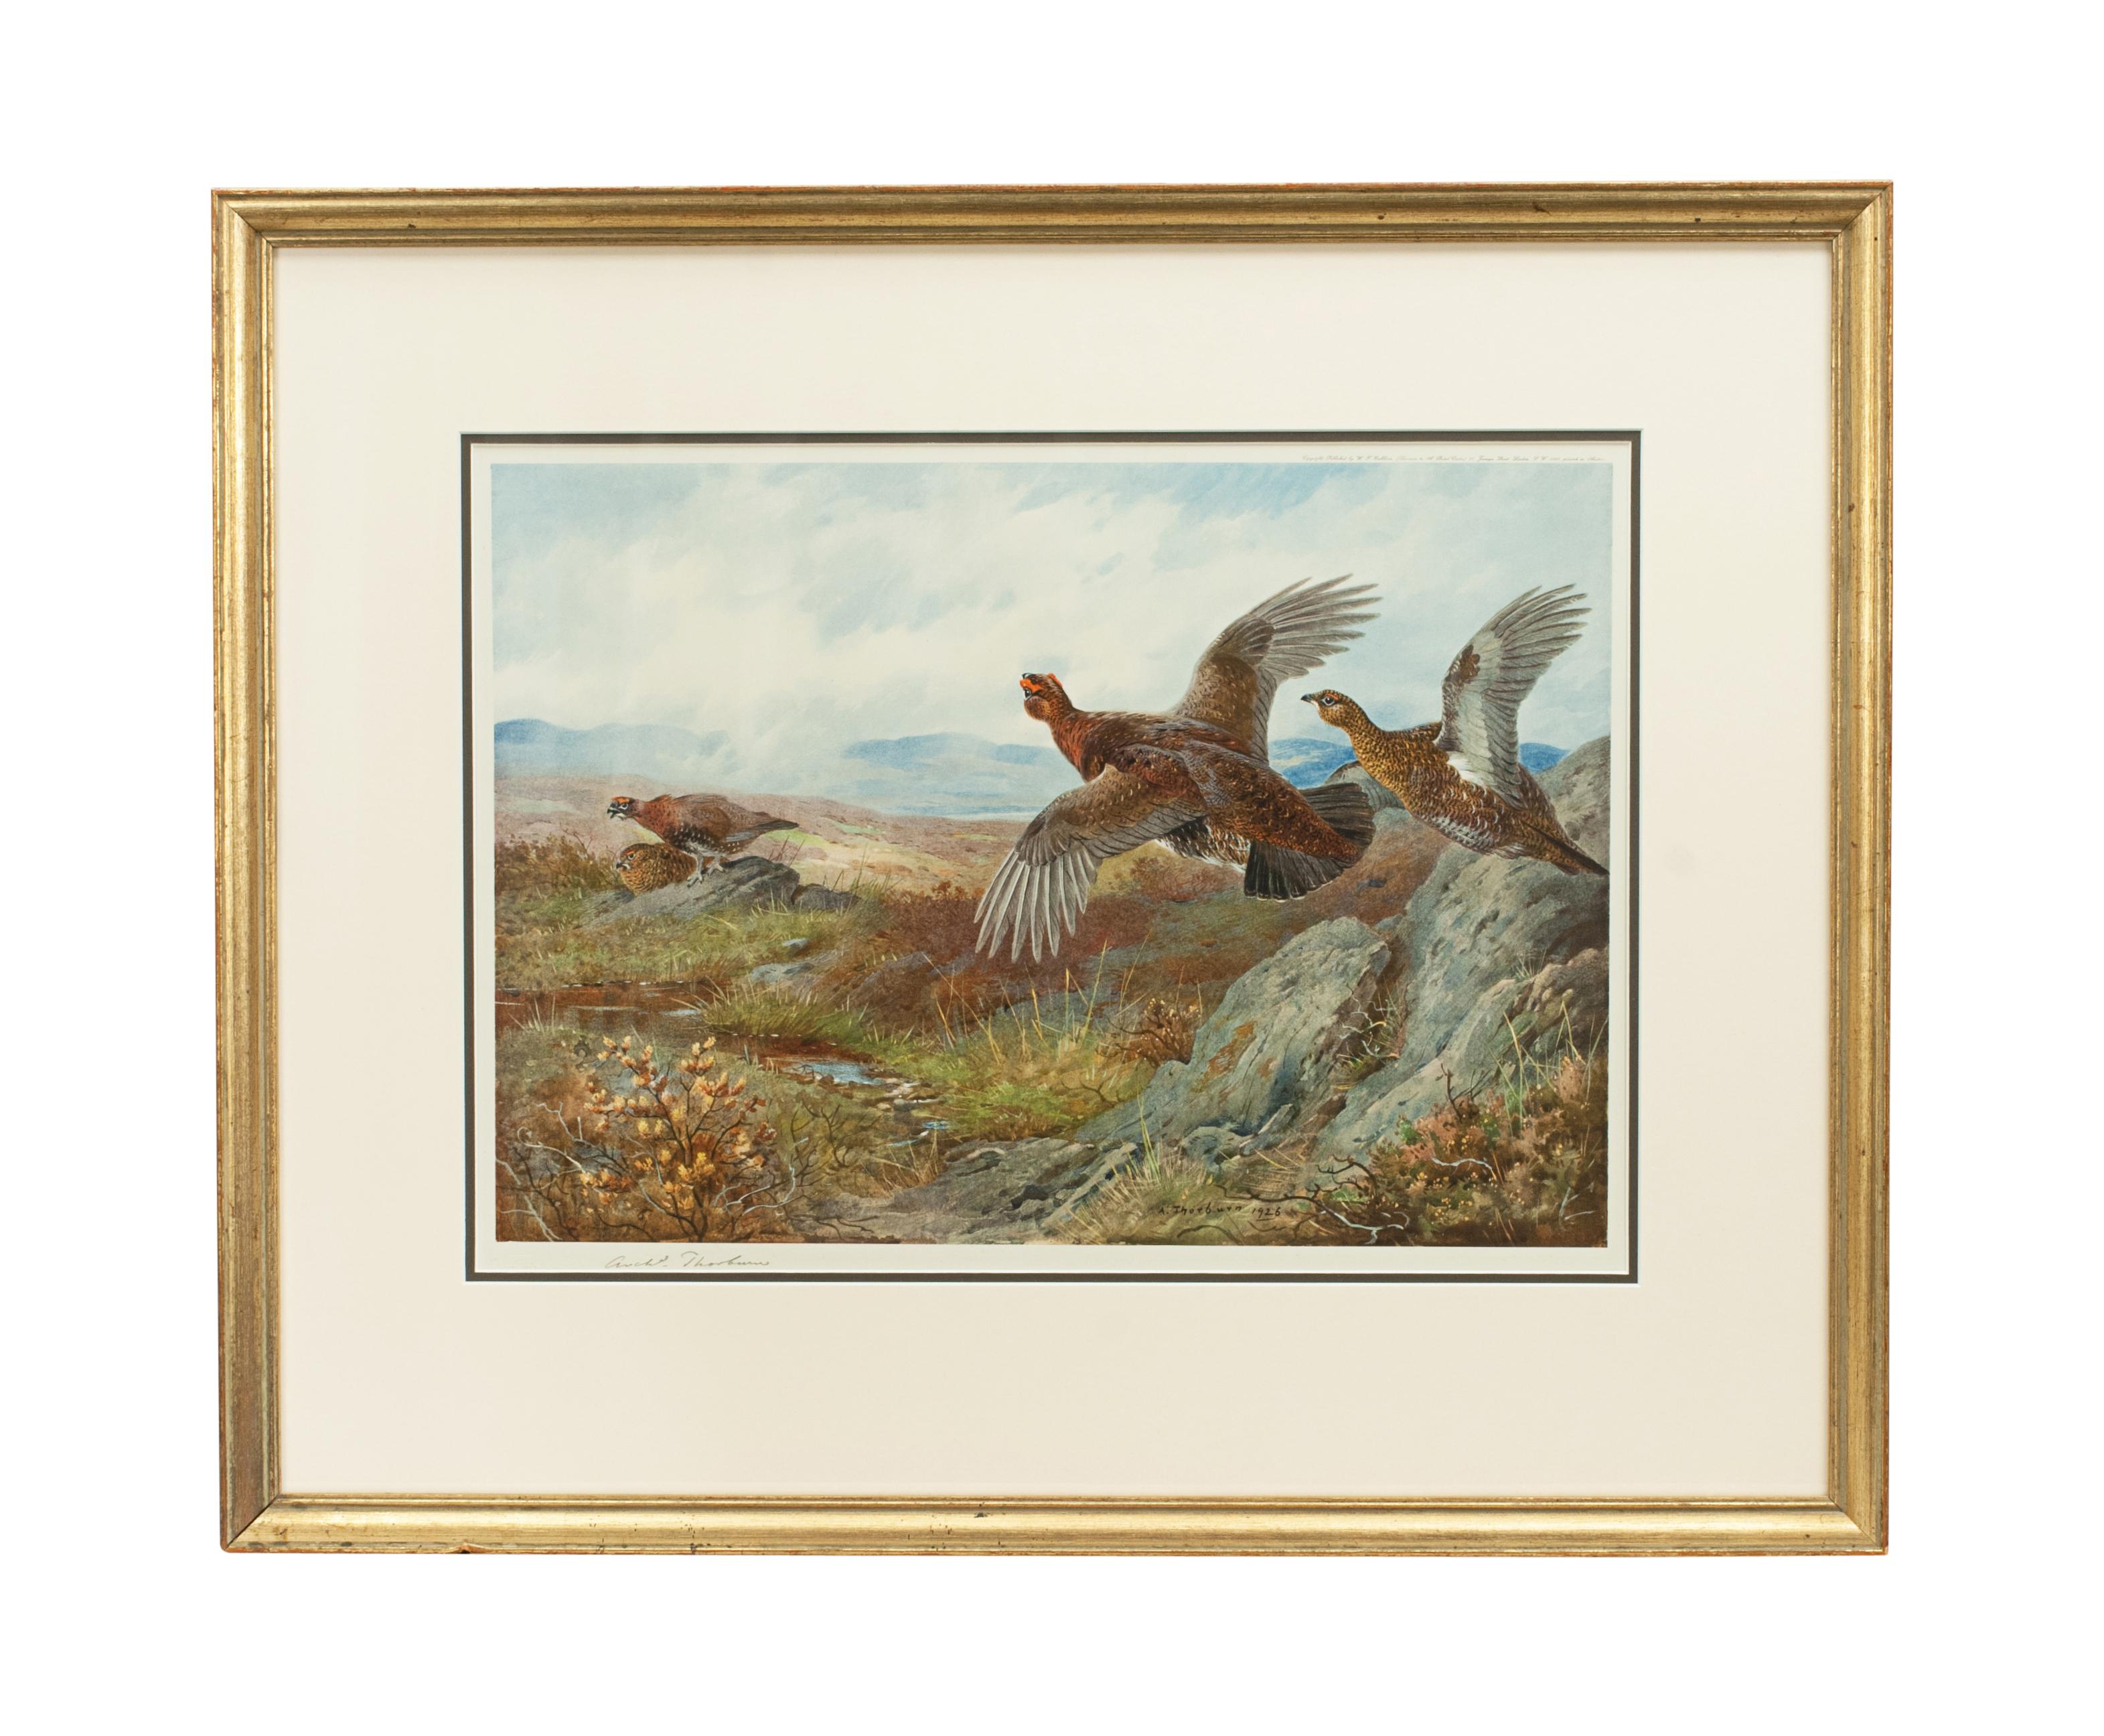 British Vintage Game Bird Prints, Colotypes by Archibald Thorburn 'The Seasons'